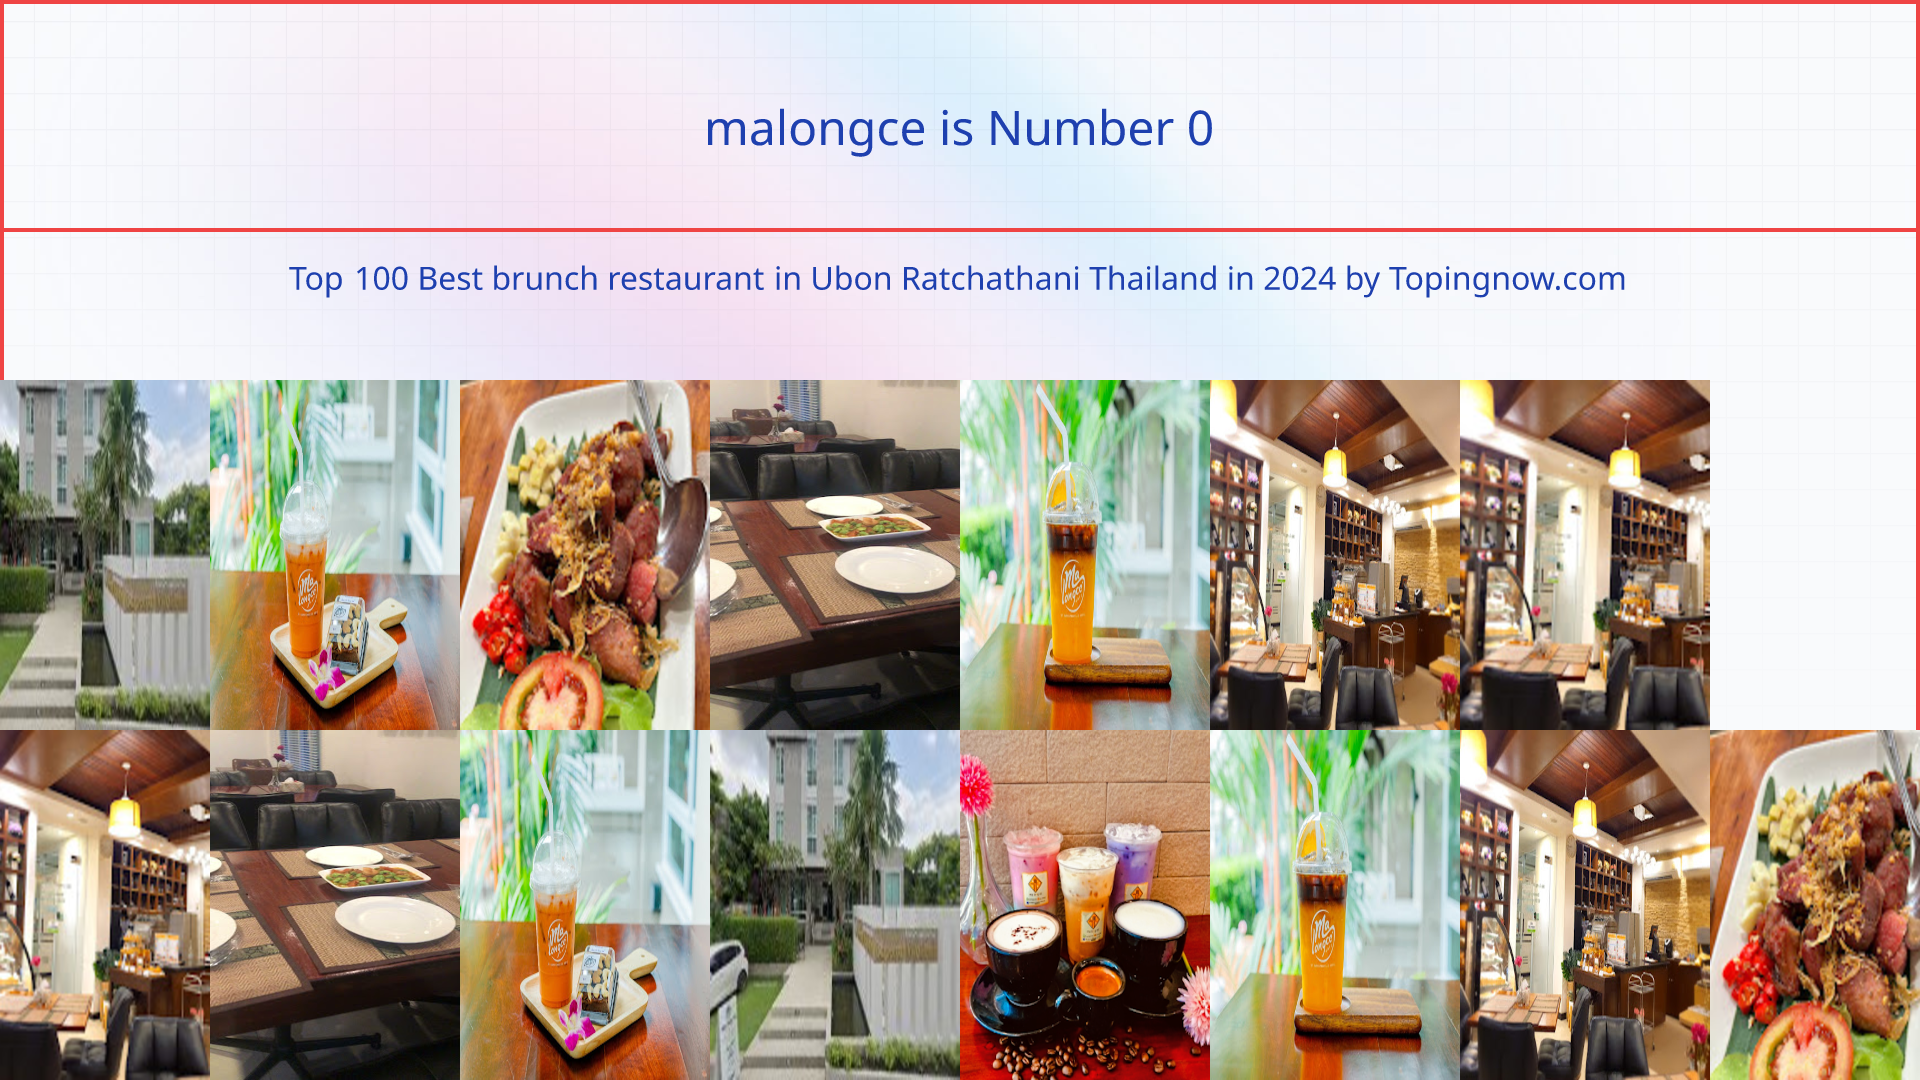 malongce: Top 100 Best brunch restaurant in Ubon Ratchathani Thailand in 2024